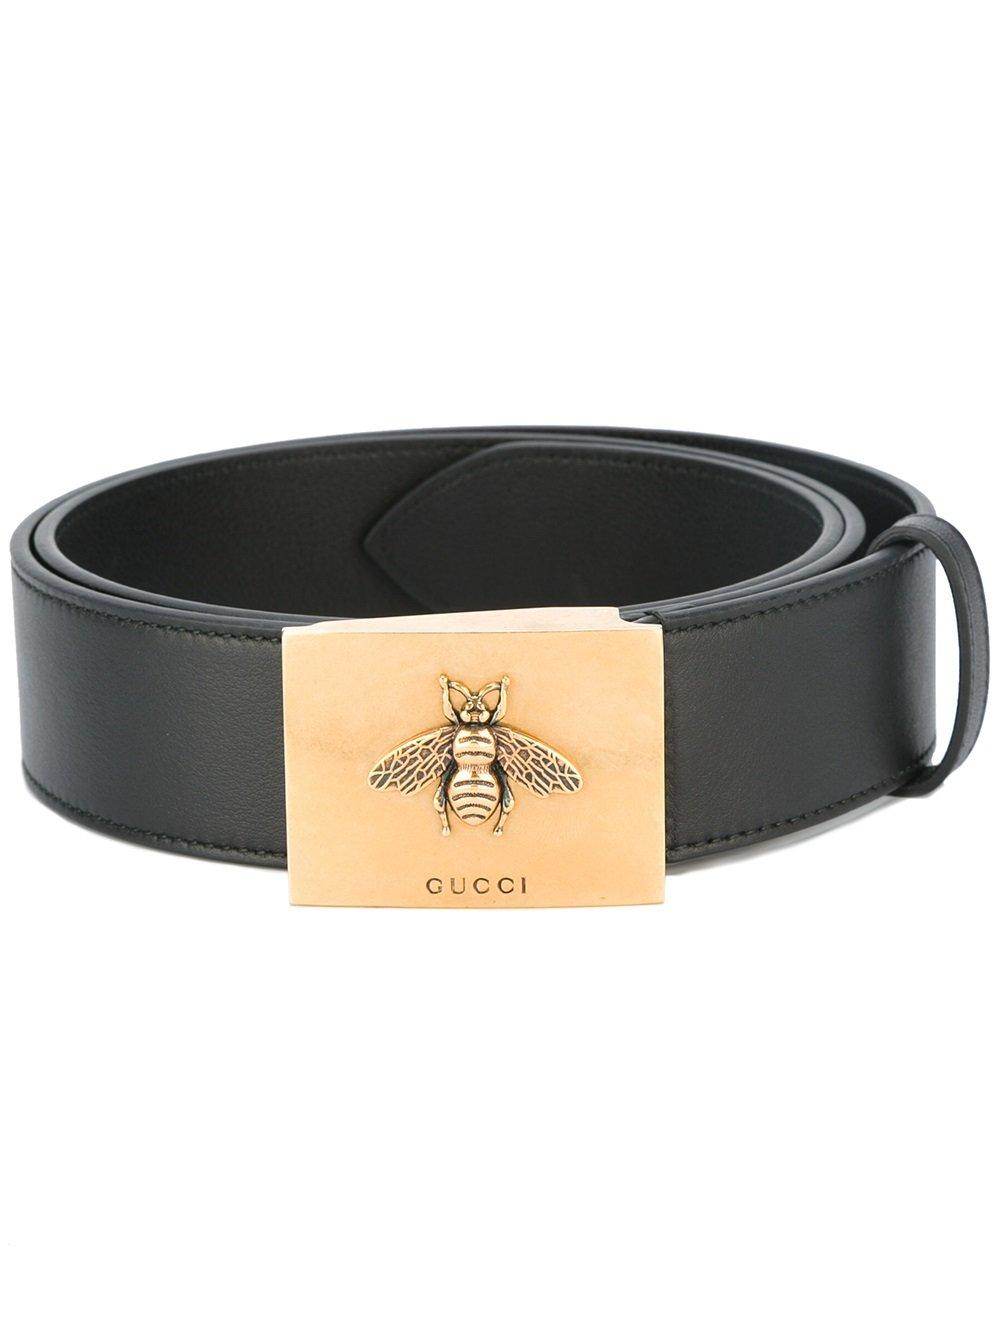 Gucci Bee Buckle Belt in Black for Men | Lyst